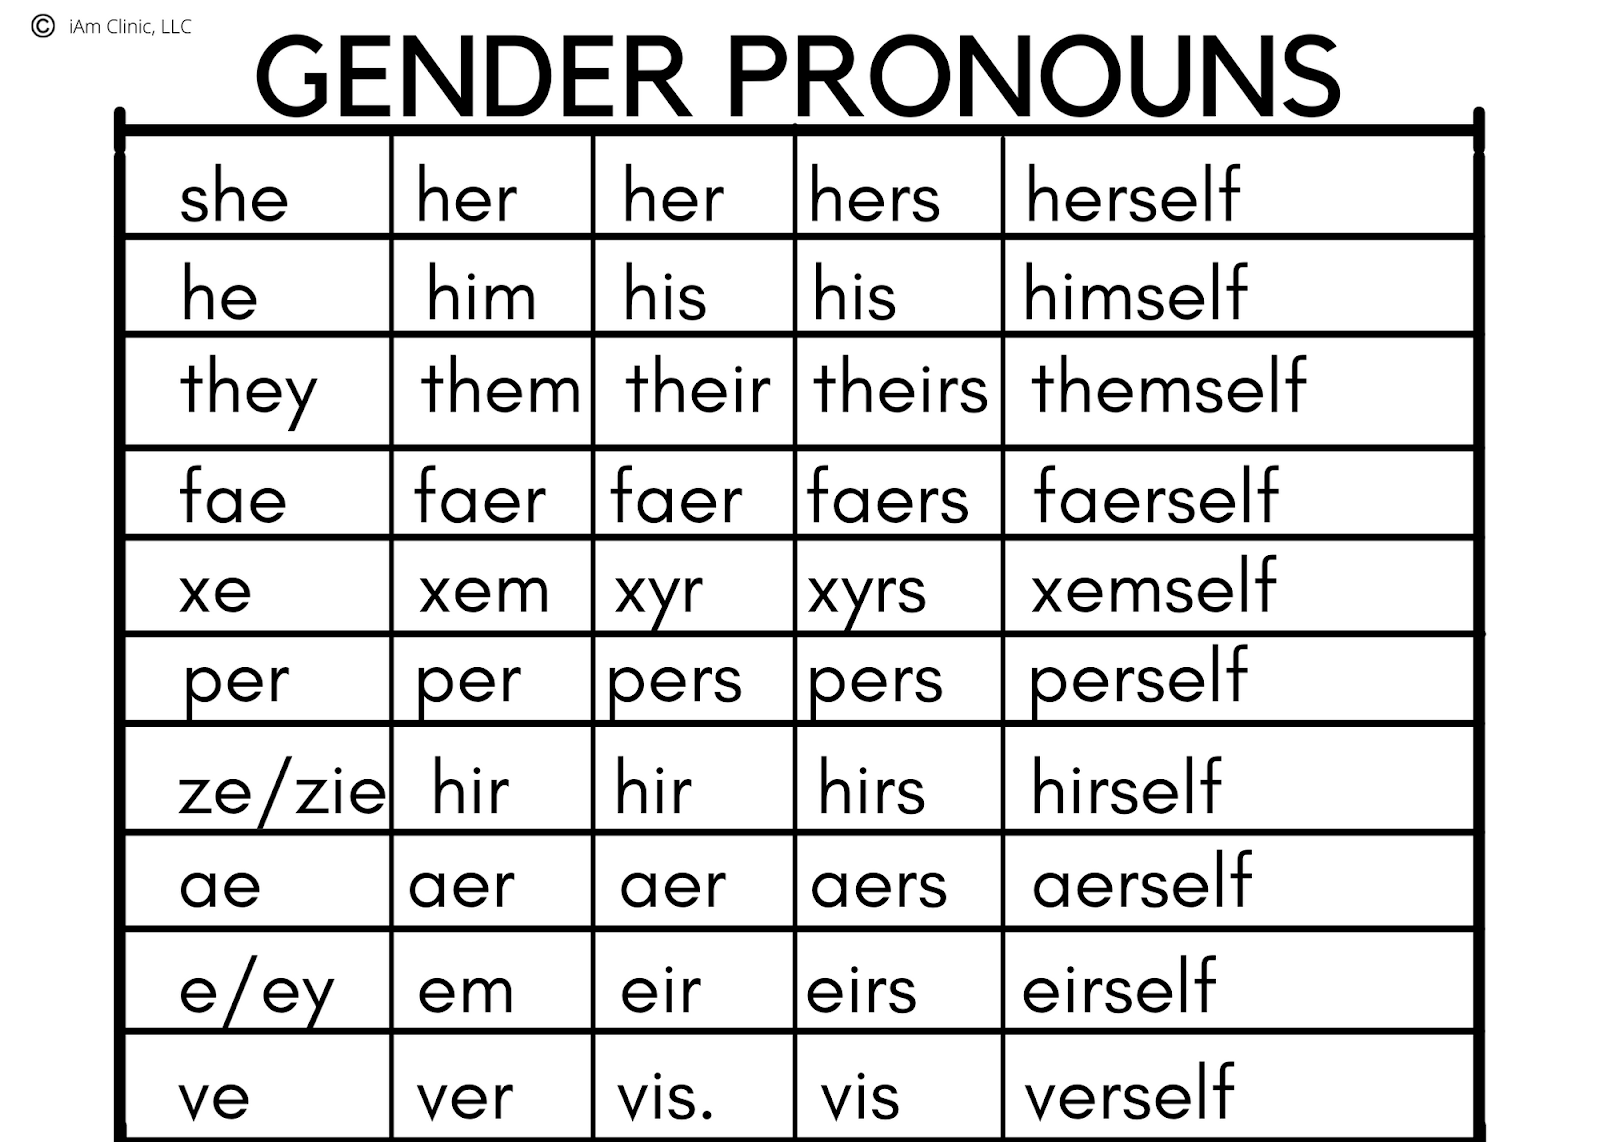 presentation-on-understanding-gender-pronouns-gender-identities